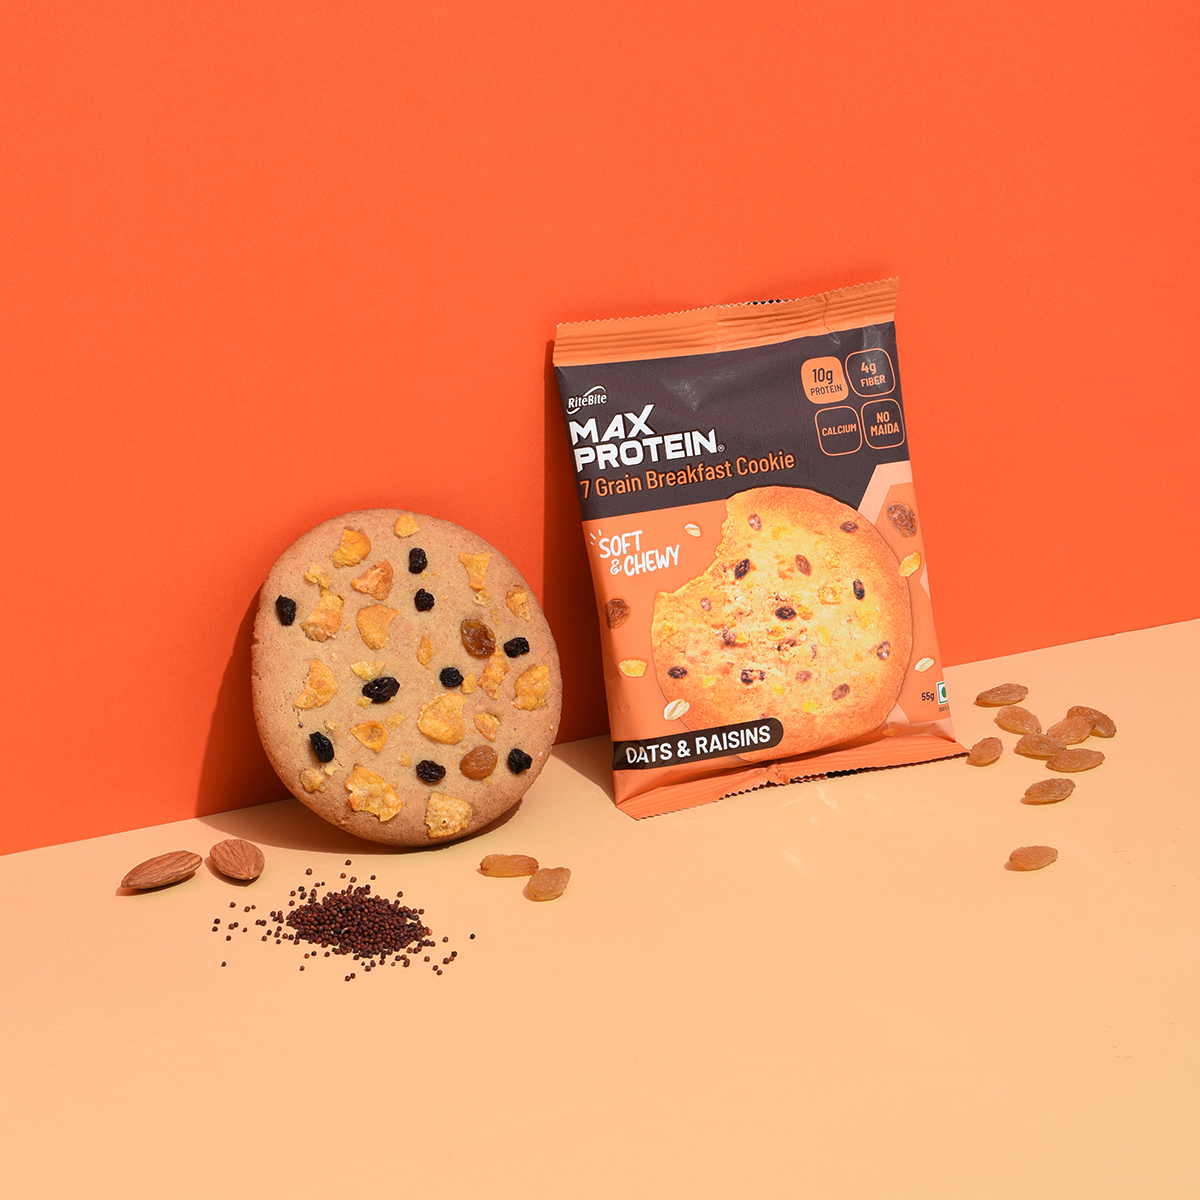 Max Protein Oats & Raisins Cookie